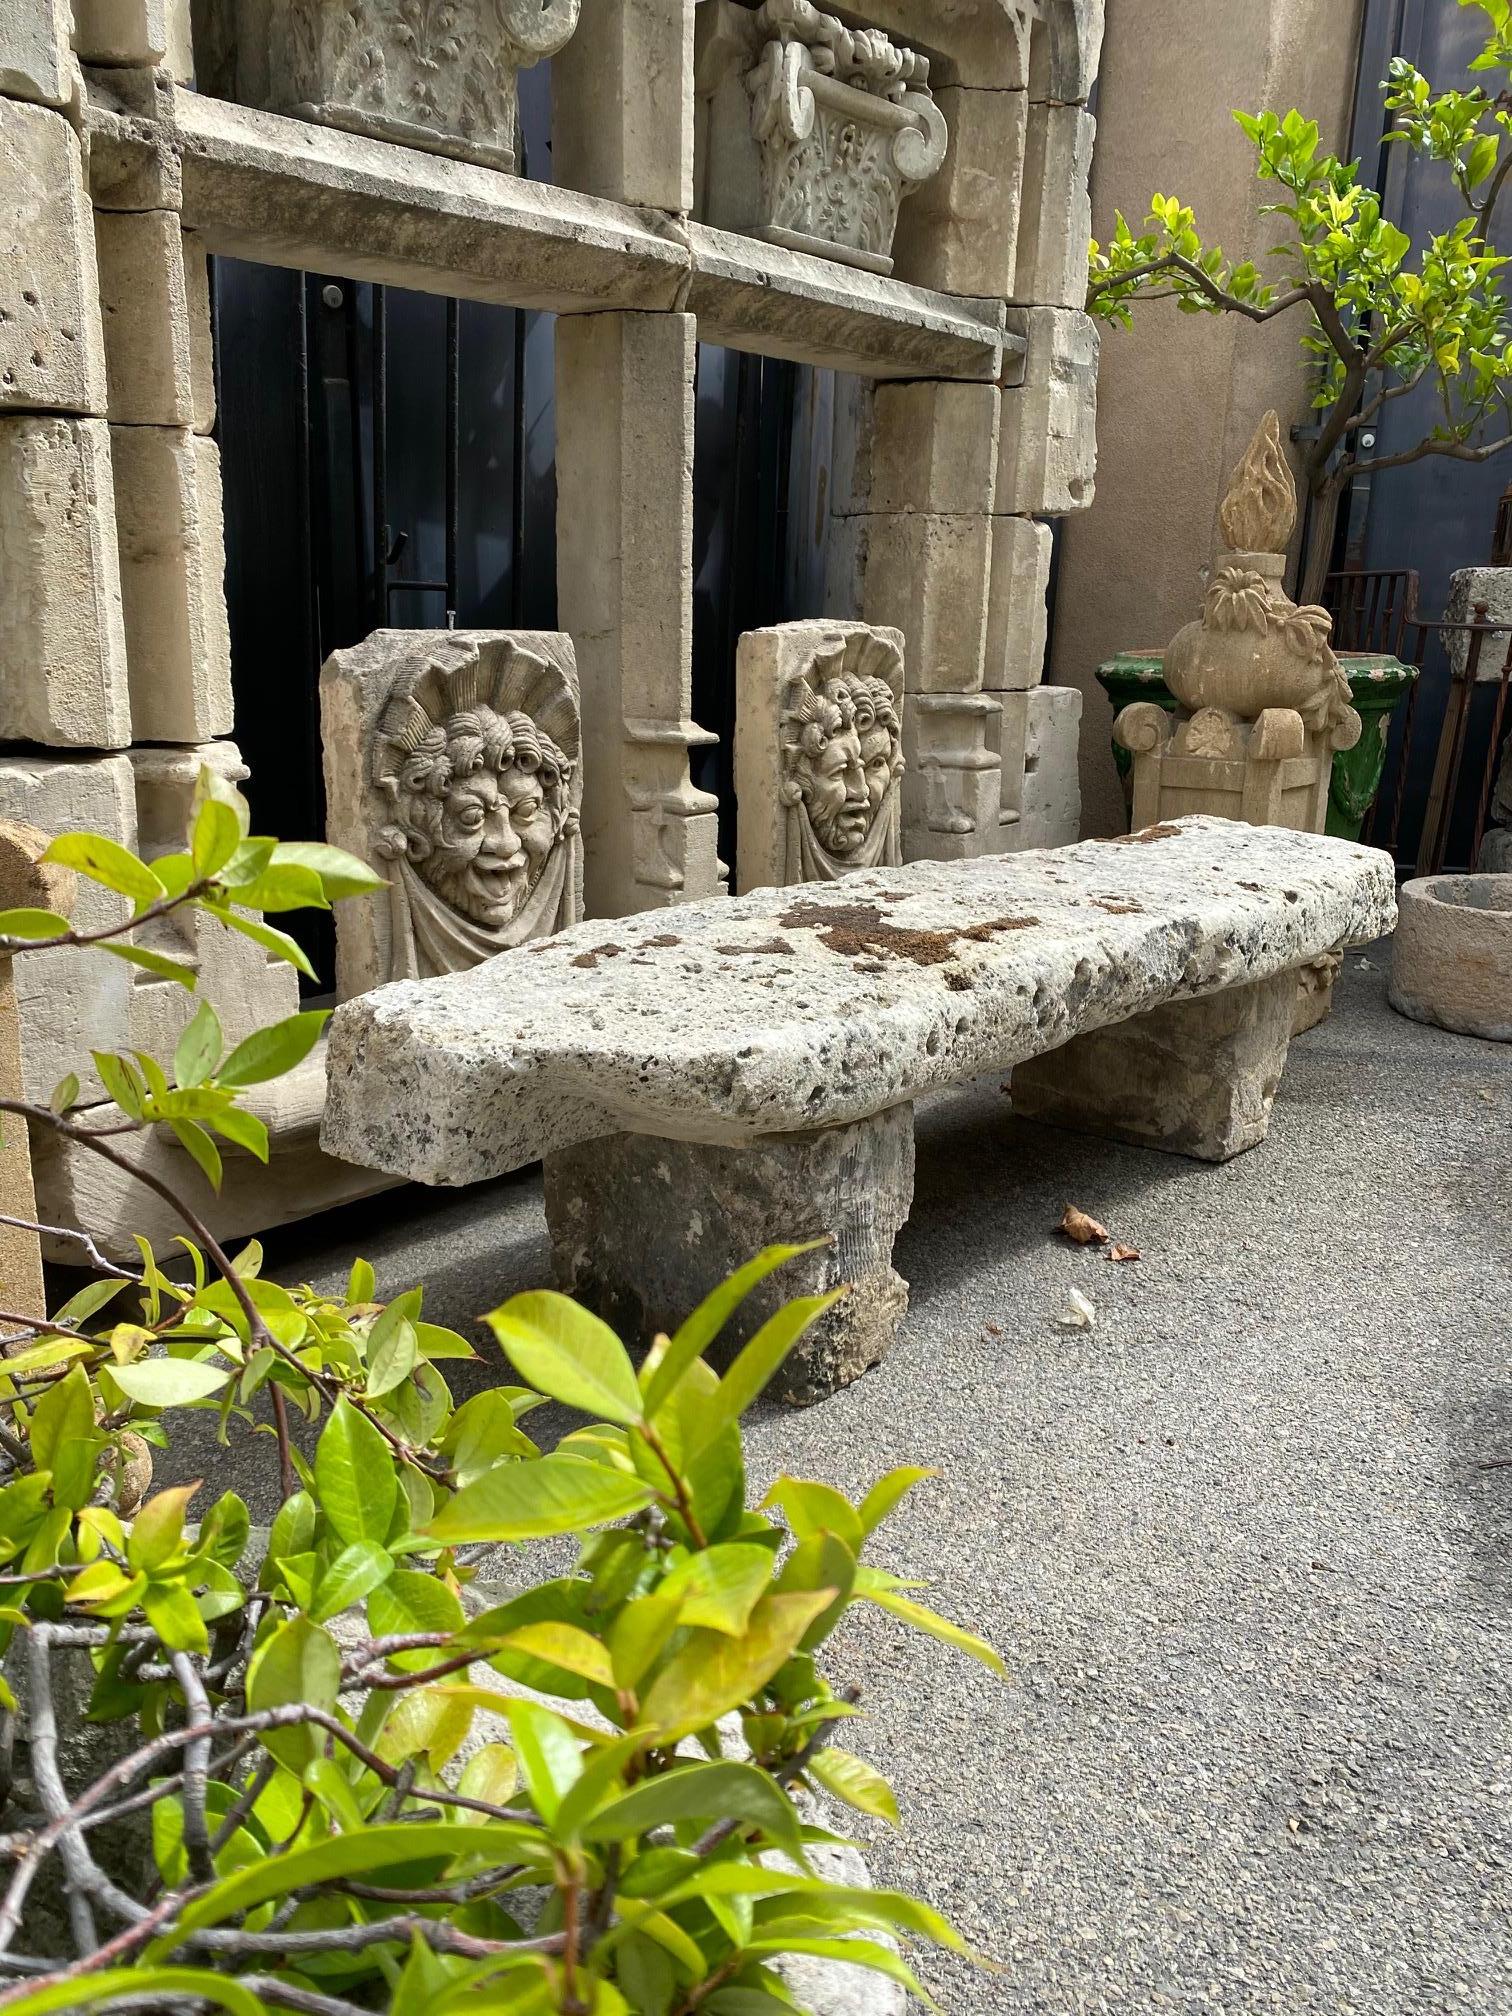 stone bench seat